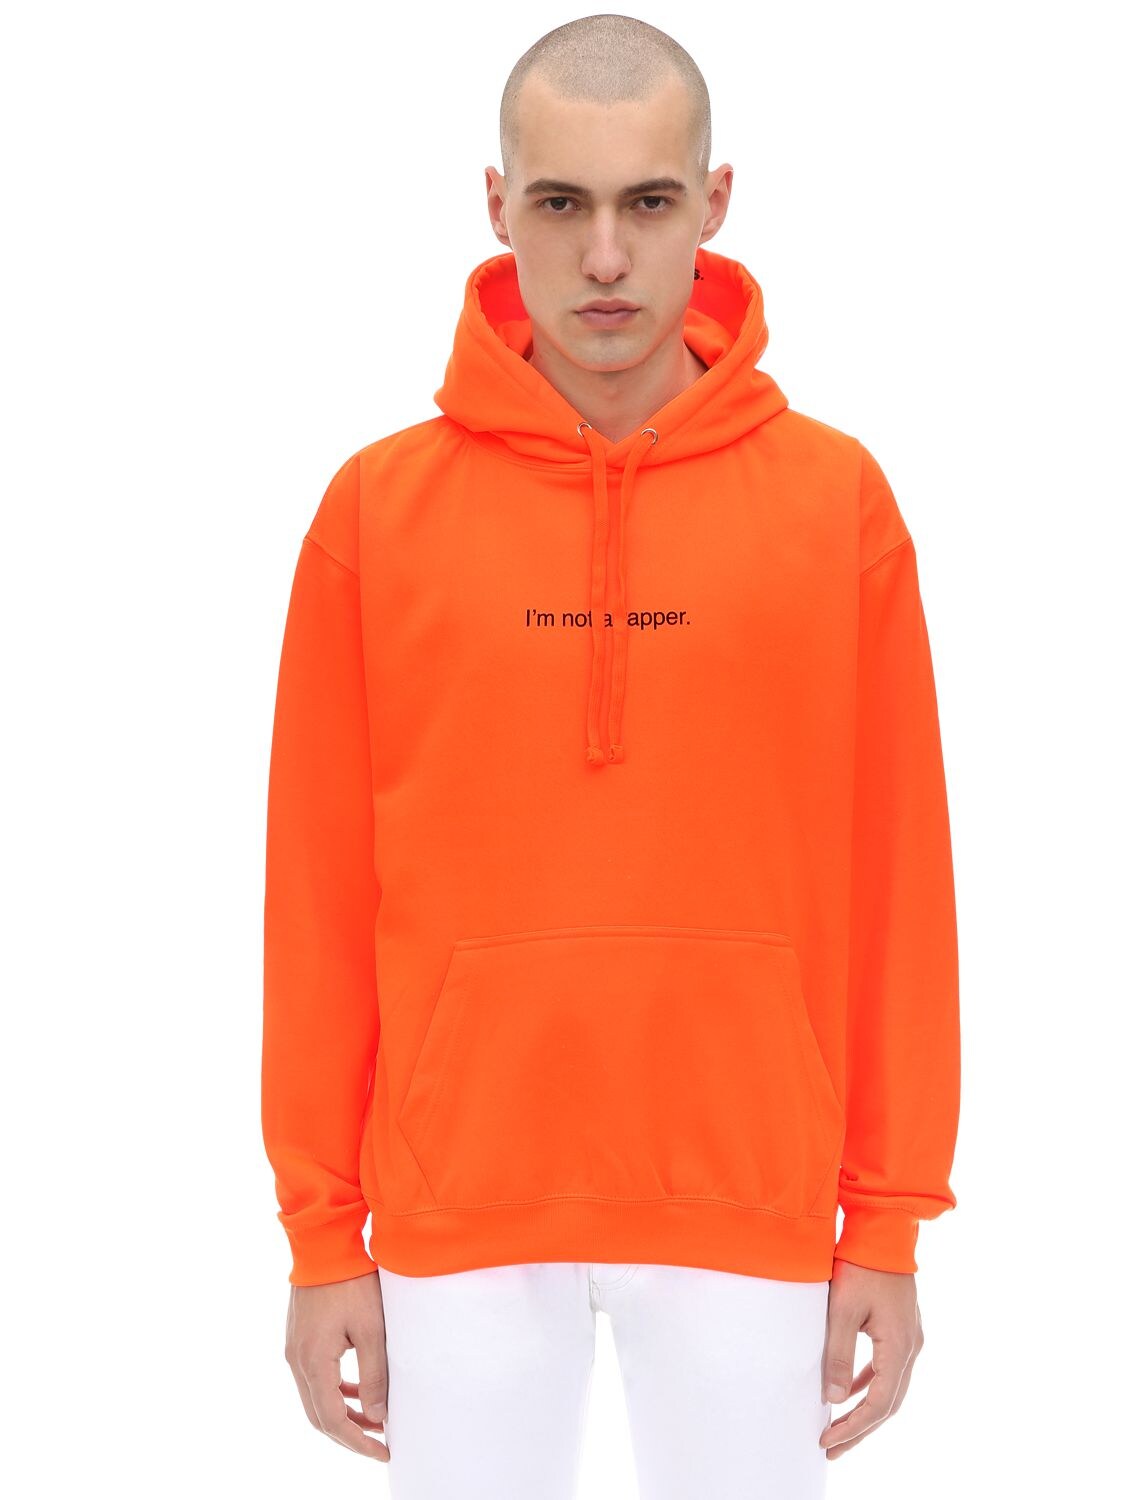 Famt - Fuck Art Make Tees I'm Not A Rapper Sweatshirt Hoodie In Neon Orange